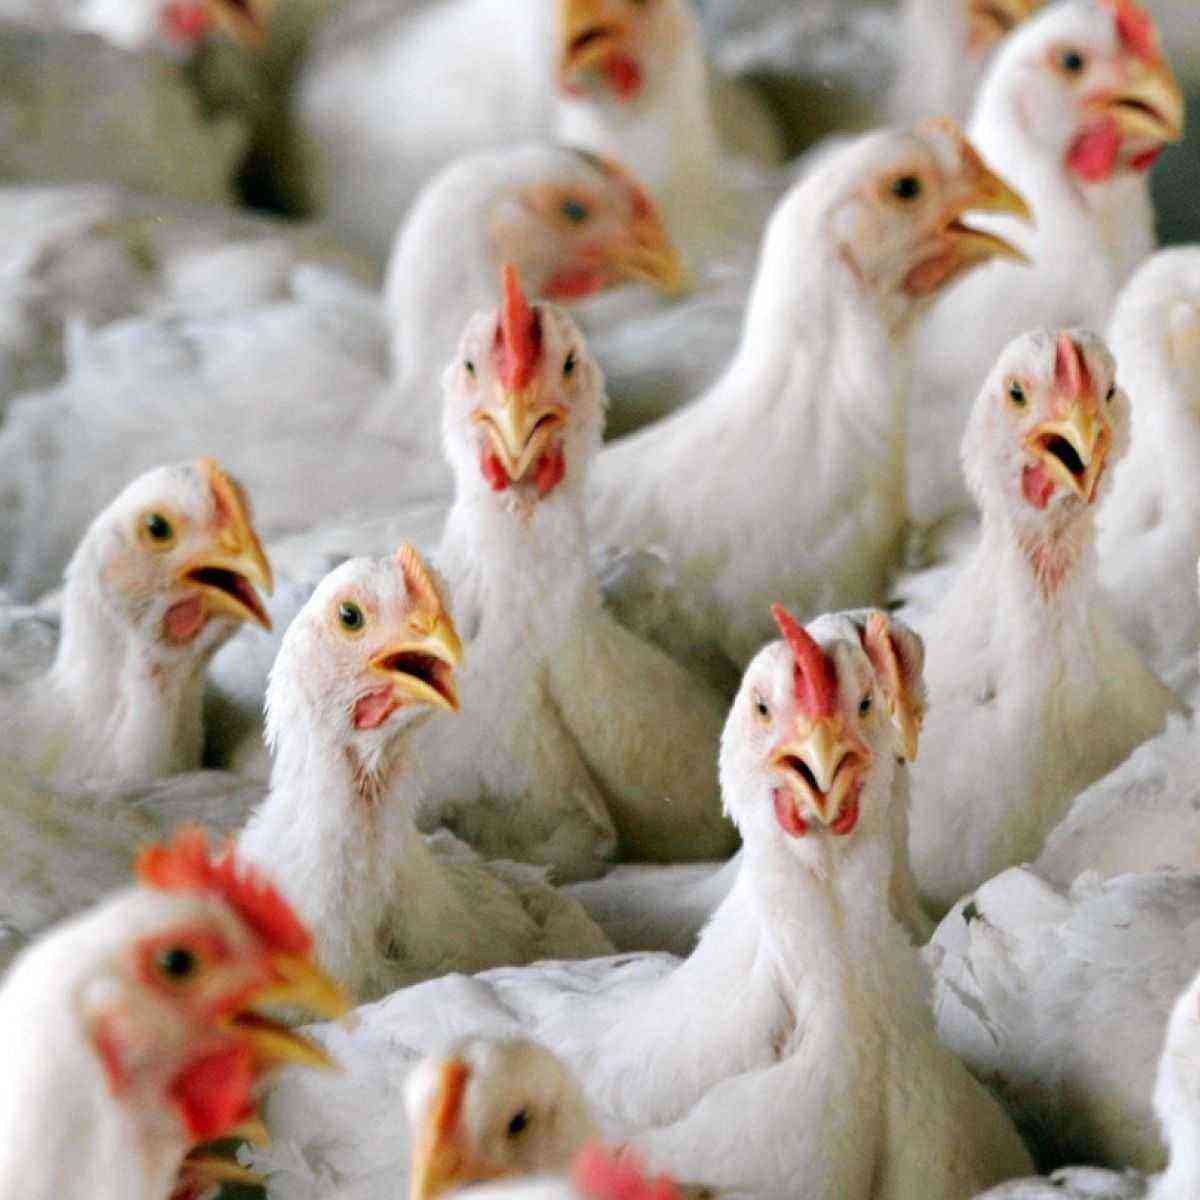 Chickens: Bird Flu